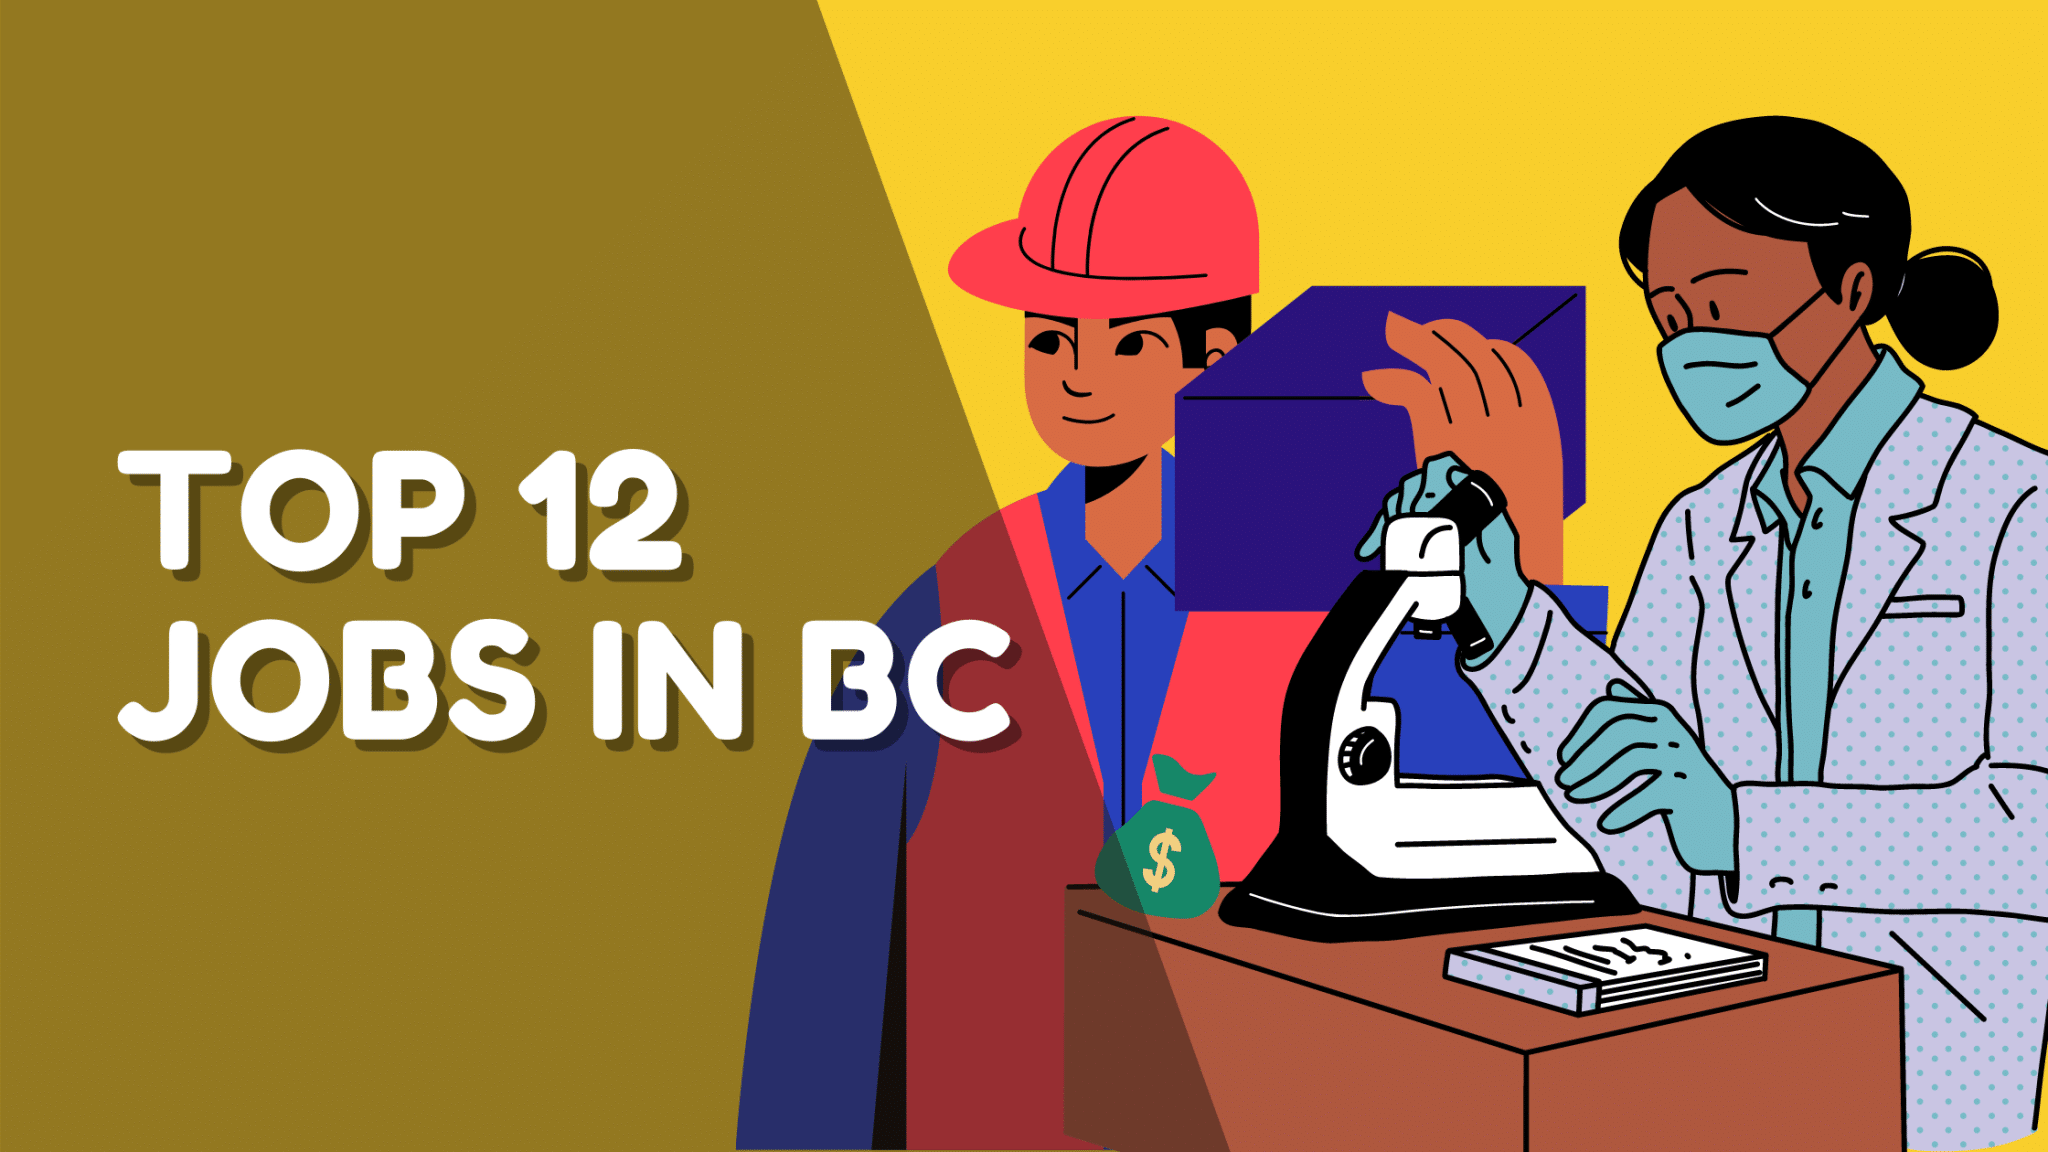 Top 12 jobs in BC hiring.